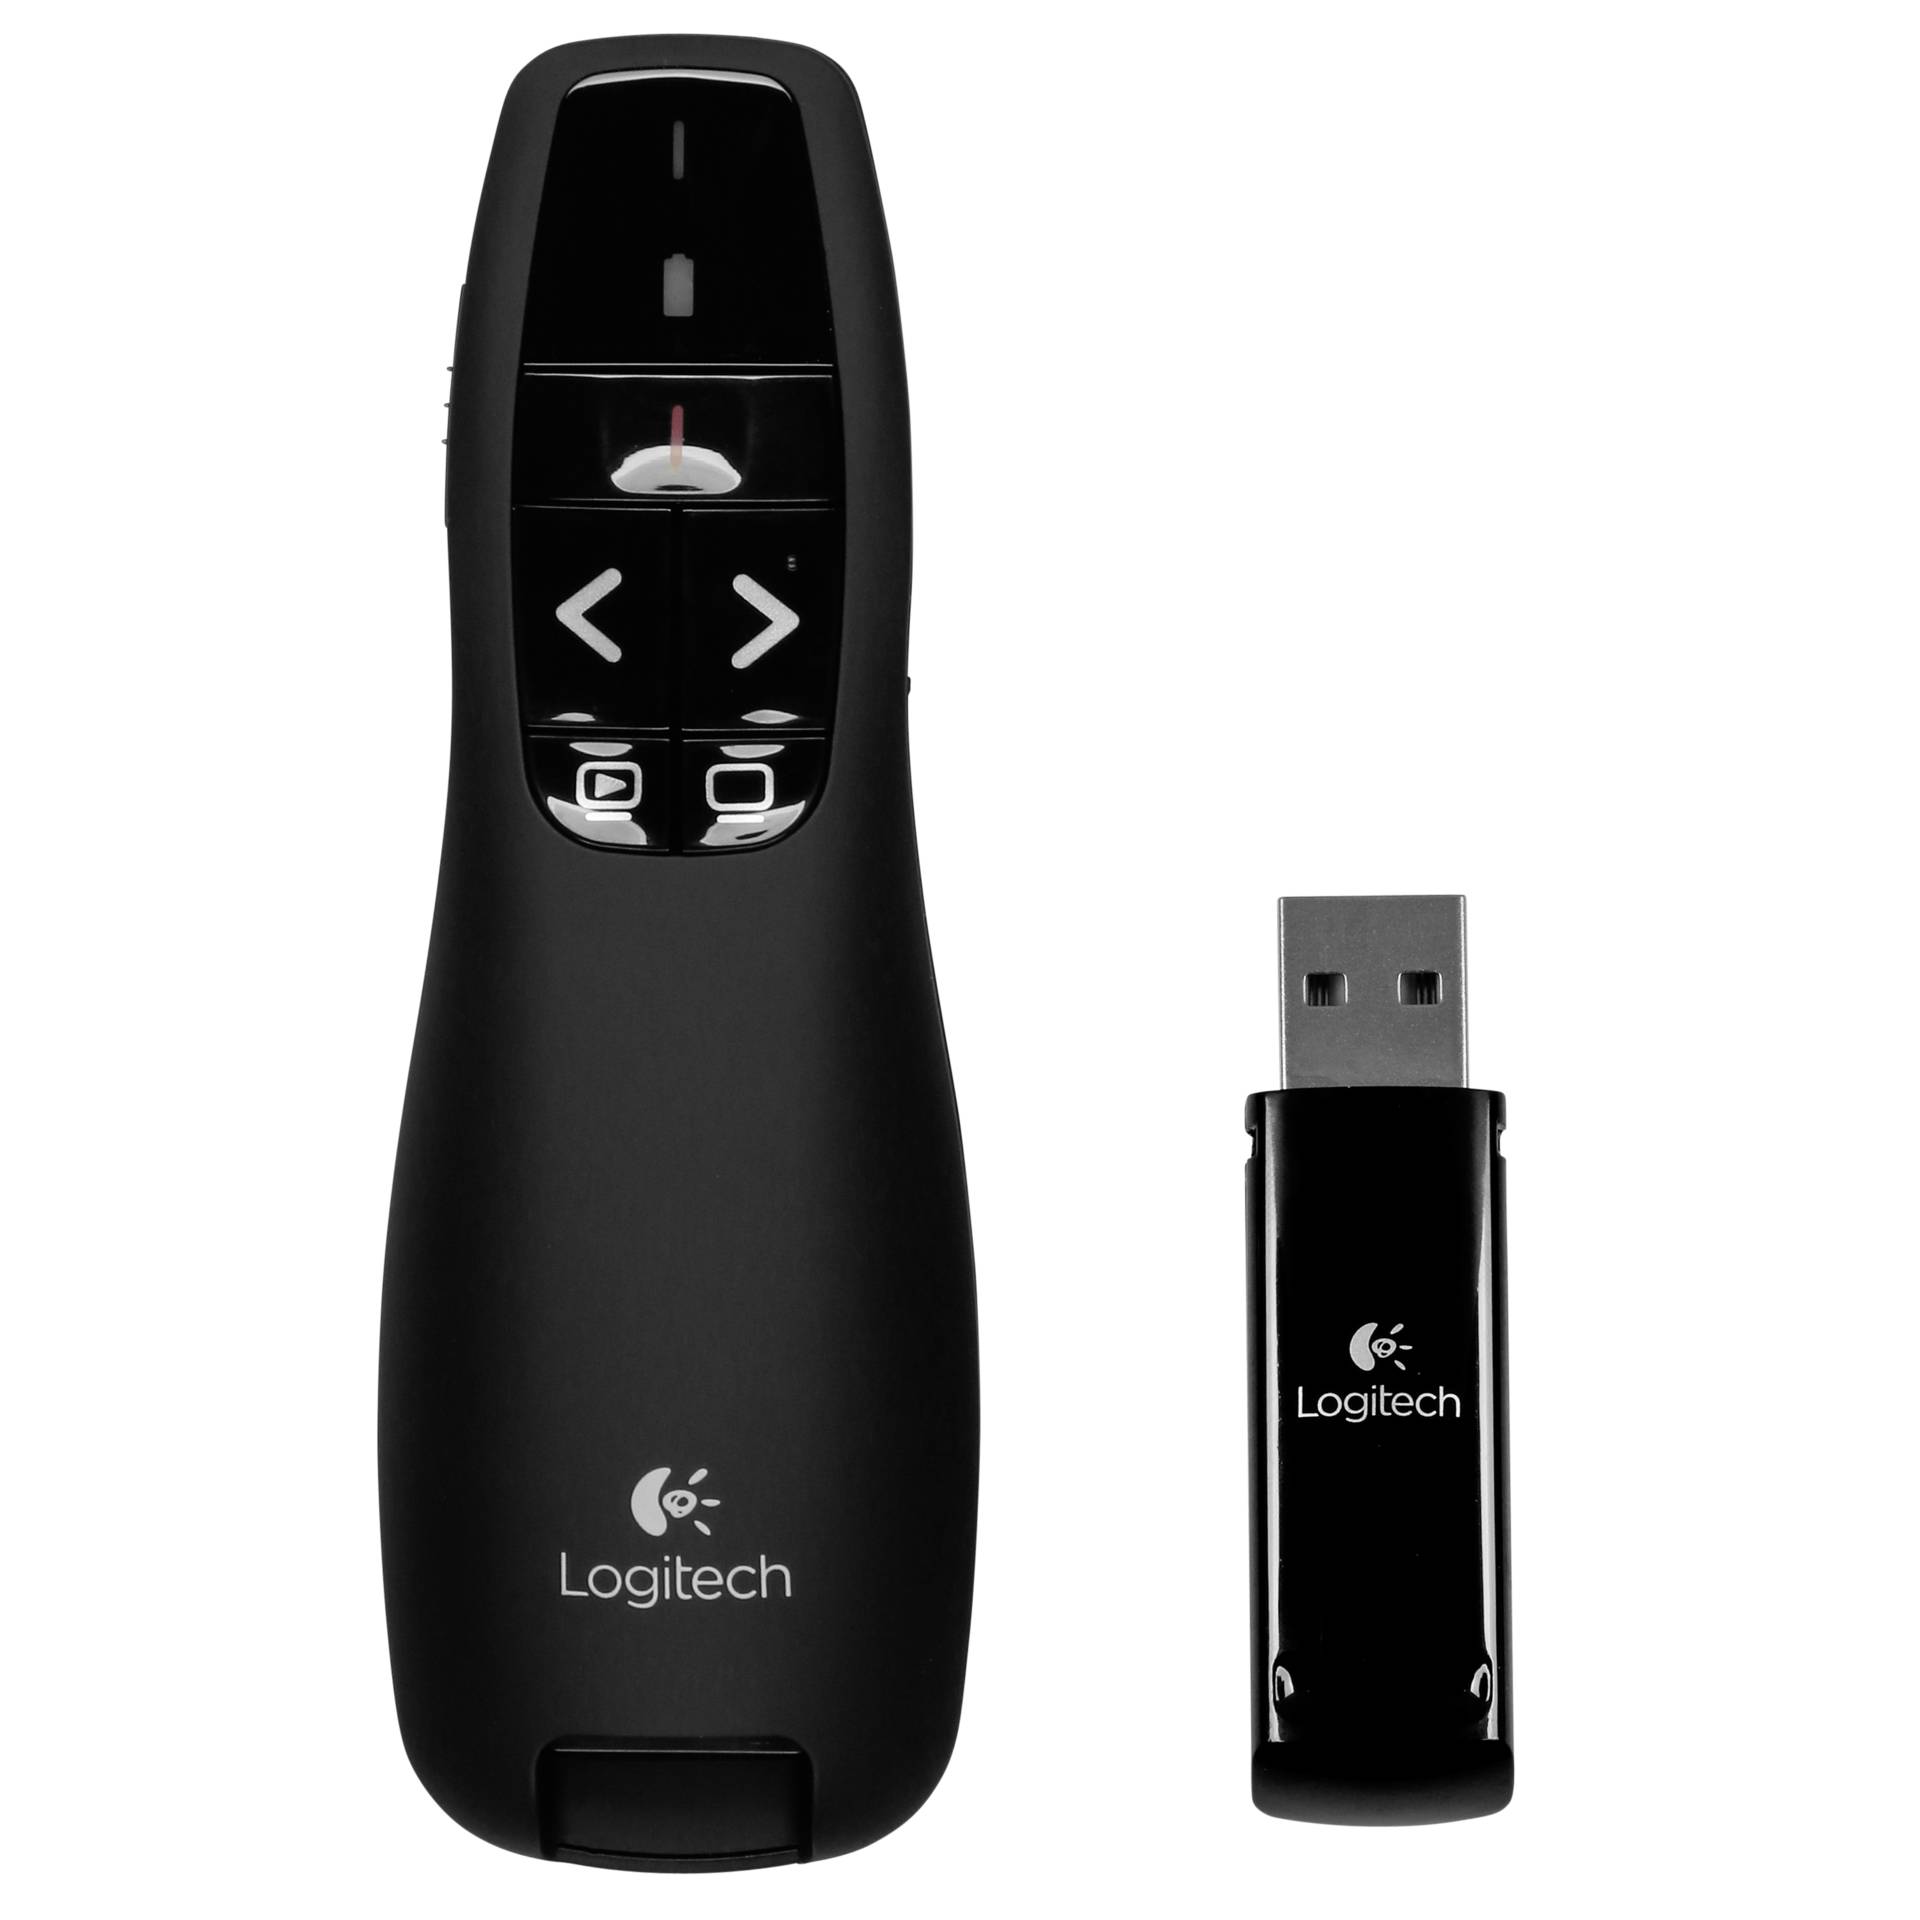 Logitech Wireless Presenter R400, USB Presenter 